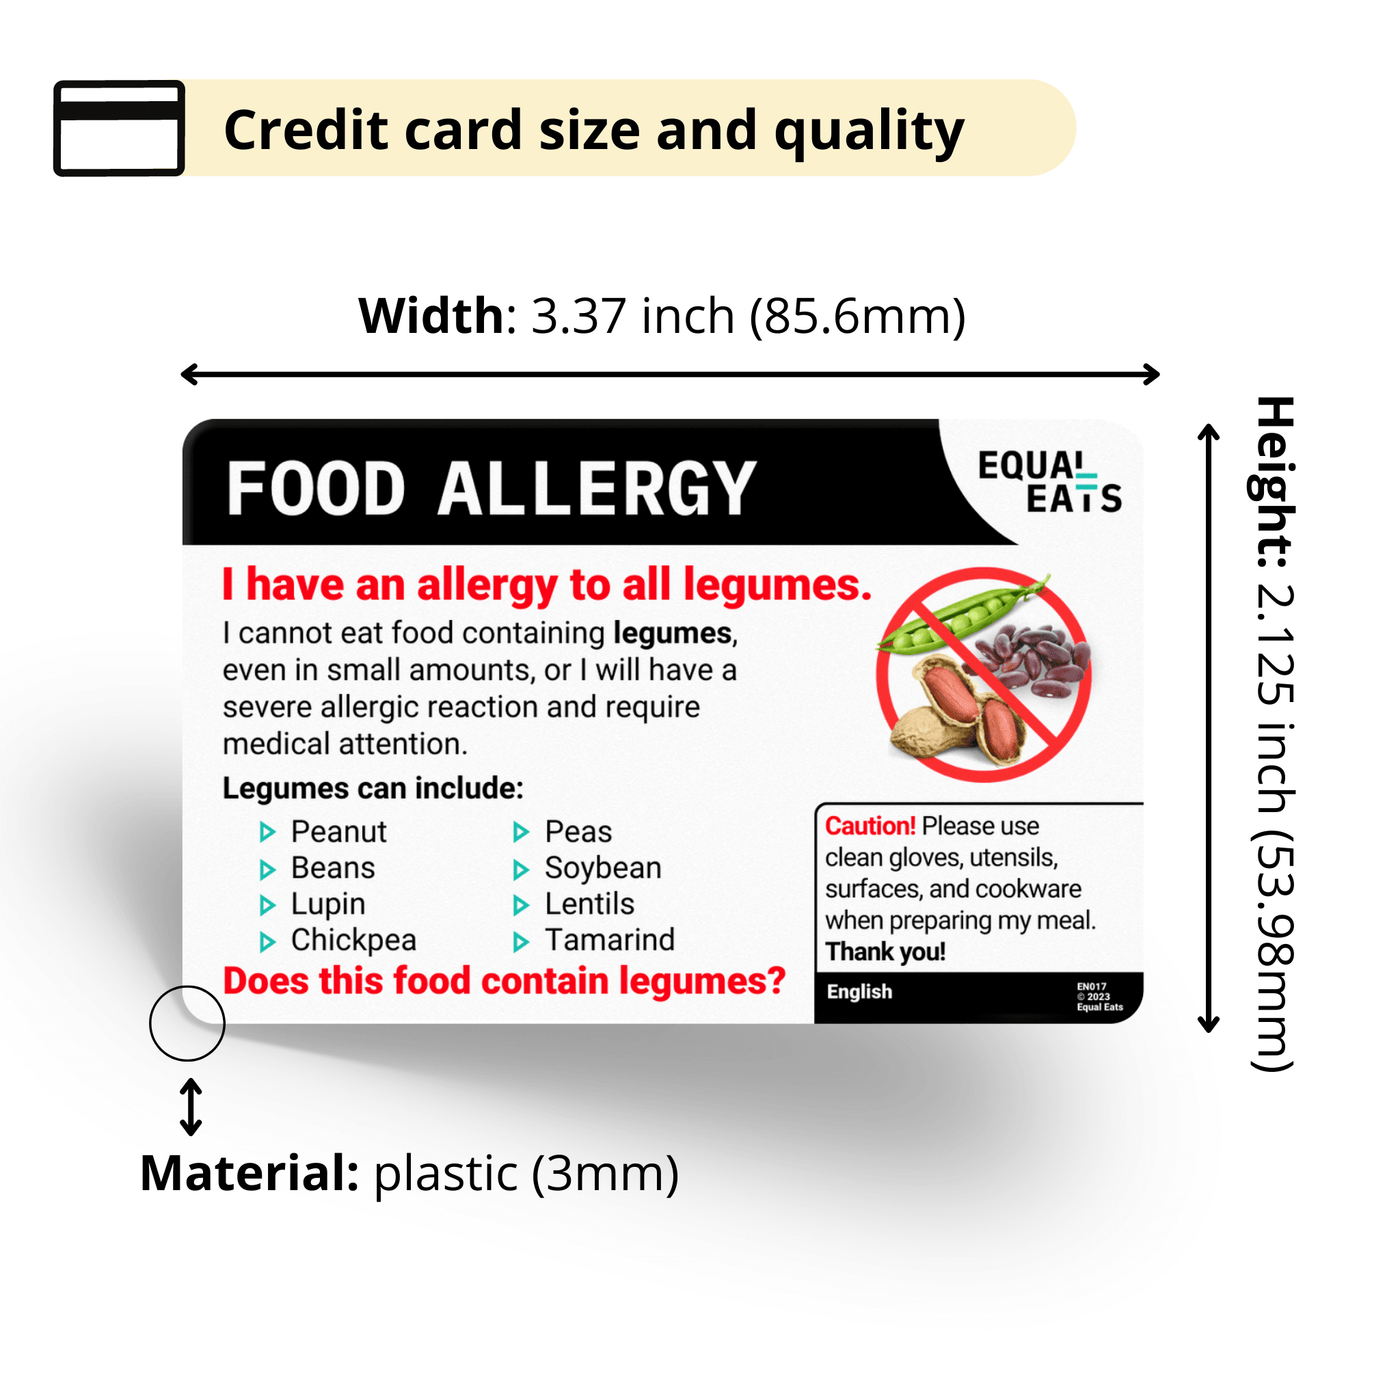 Portuguese (Brazil) Legume Allergy Card